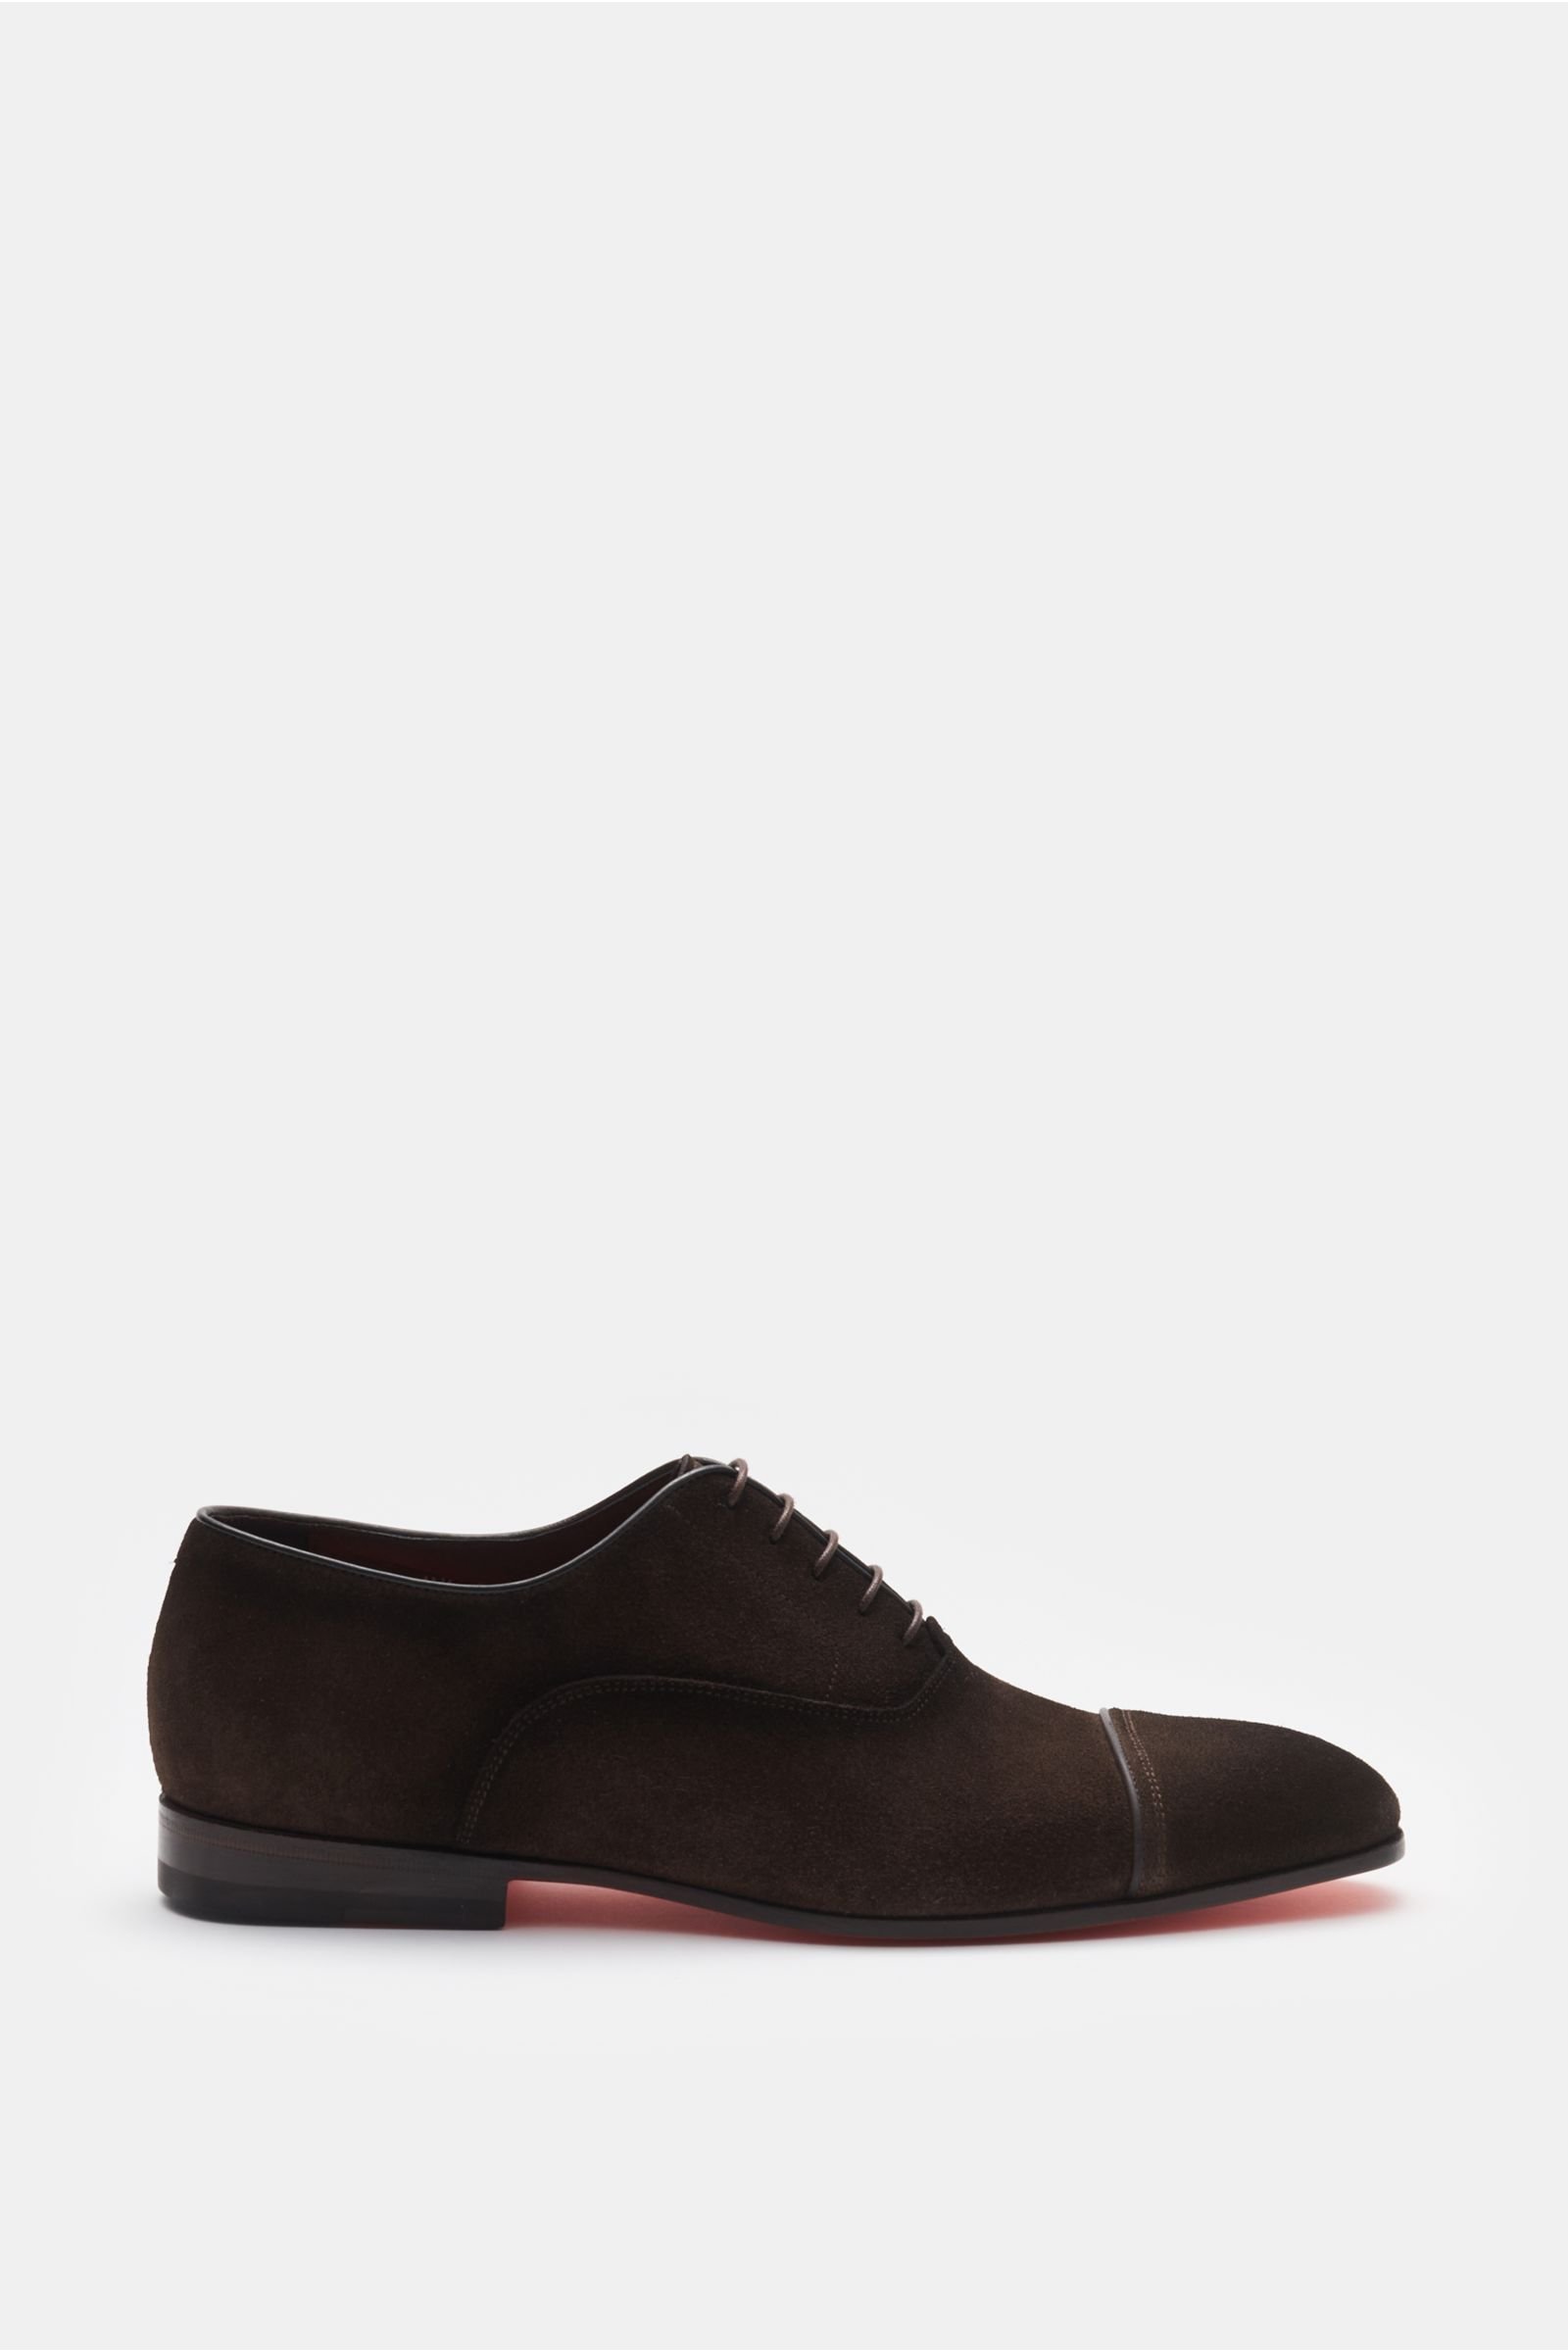 Oxford shoes dark brown